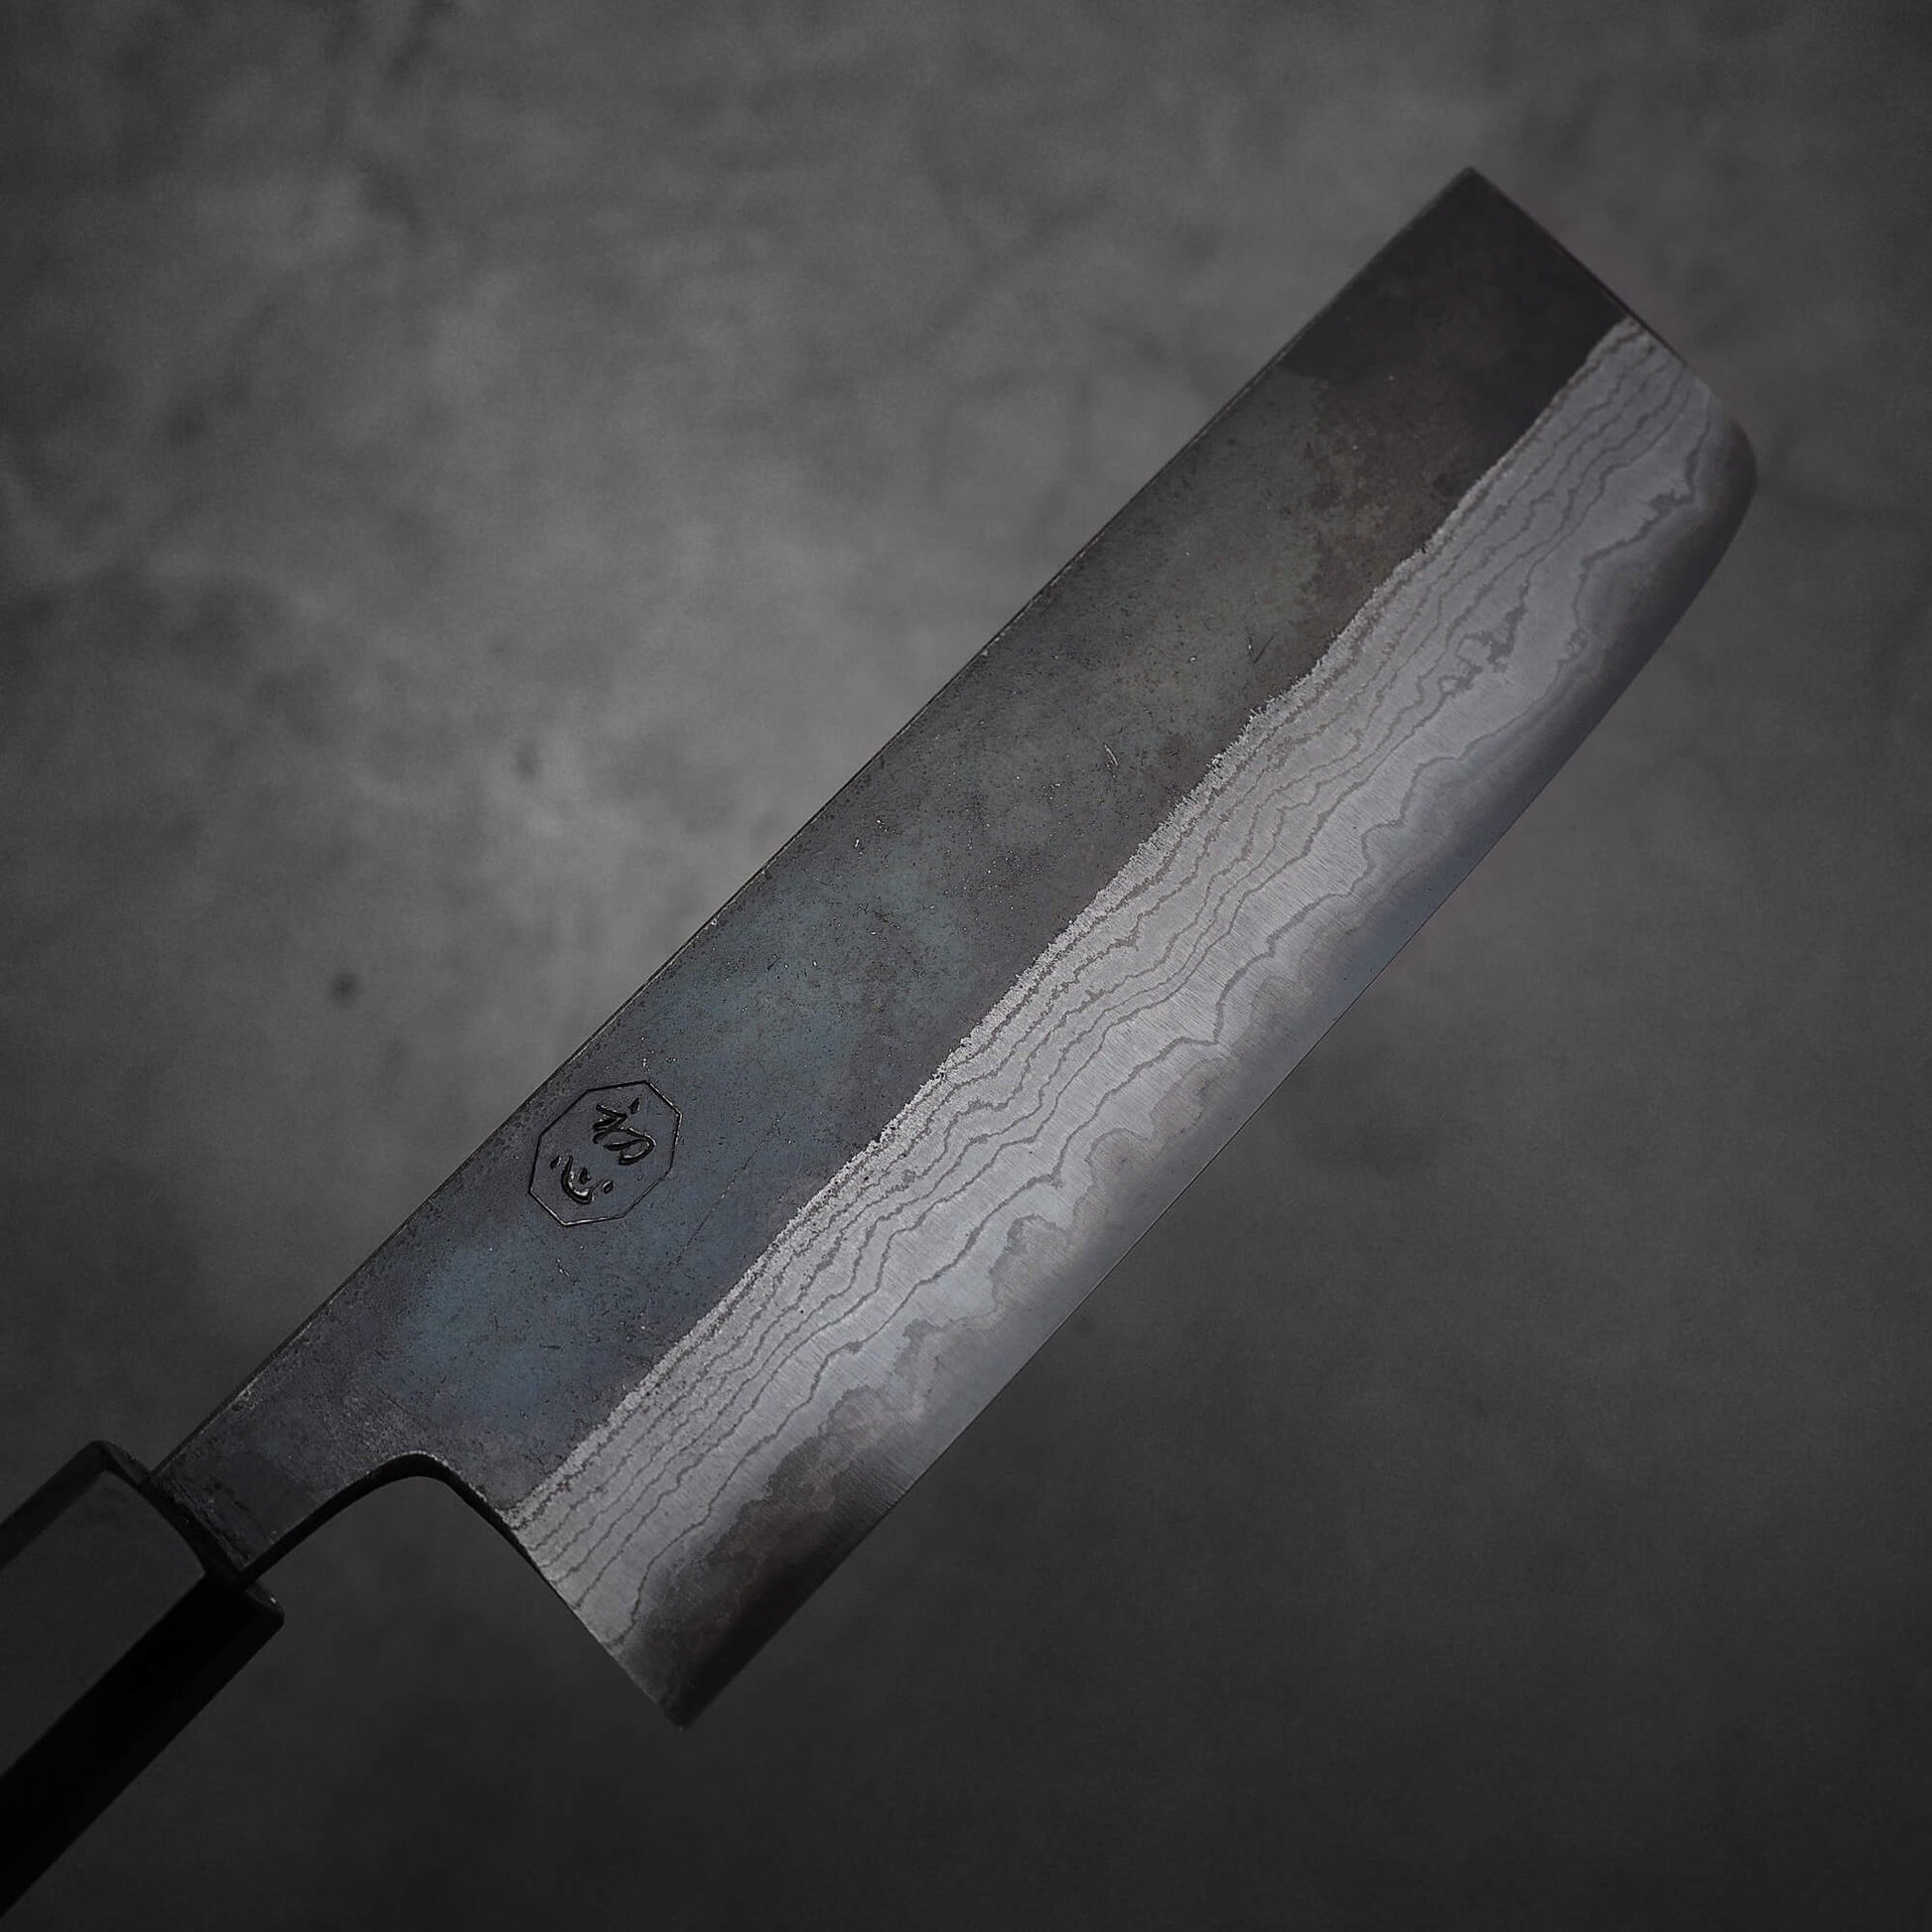 Top view of the blade of Hatsukokoro Kumokage kurouchi damascus aogami#2 nakiri knife. Image shows the right side of the blade